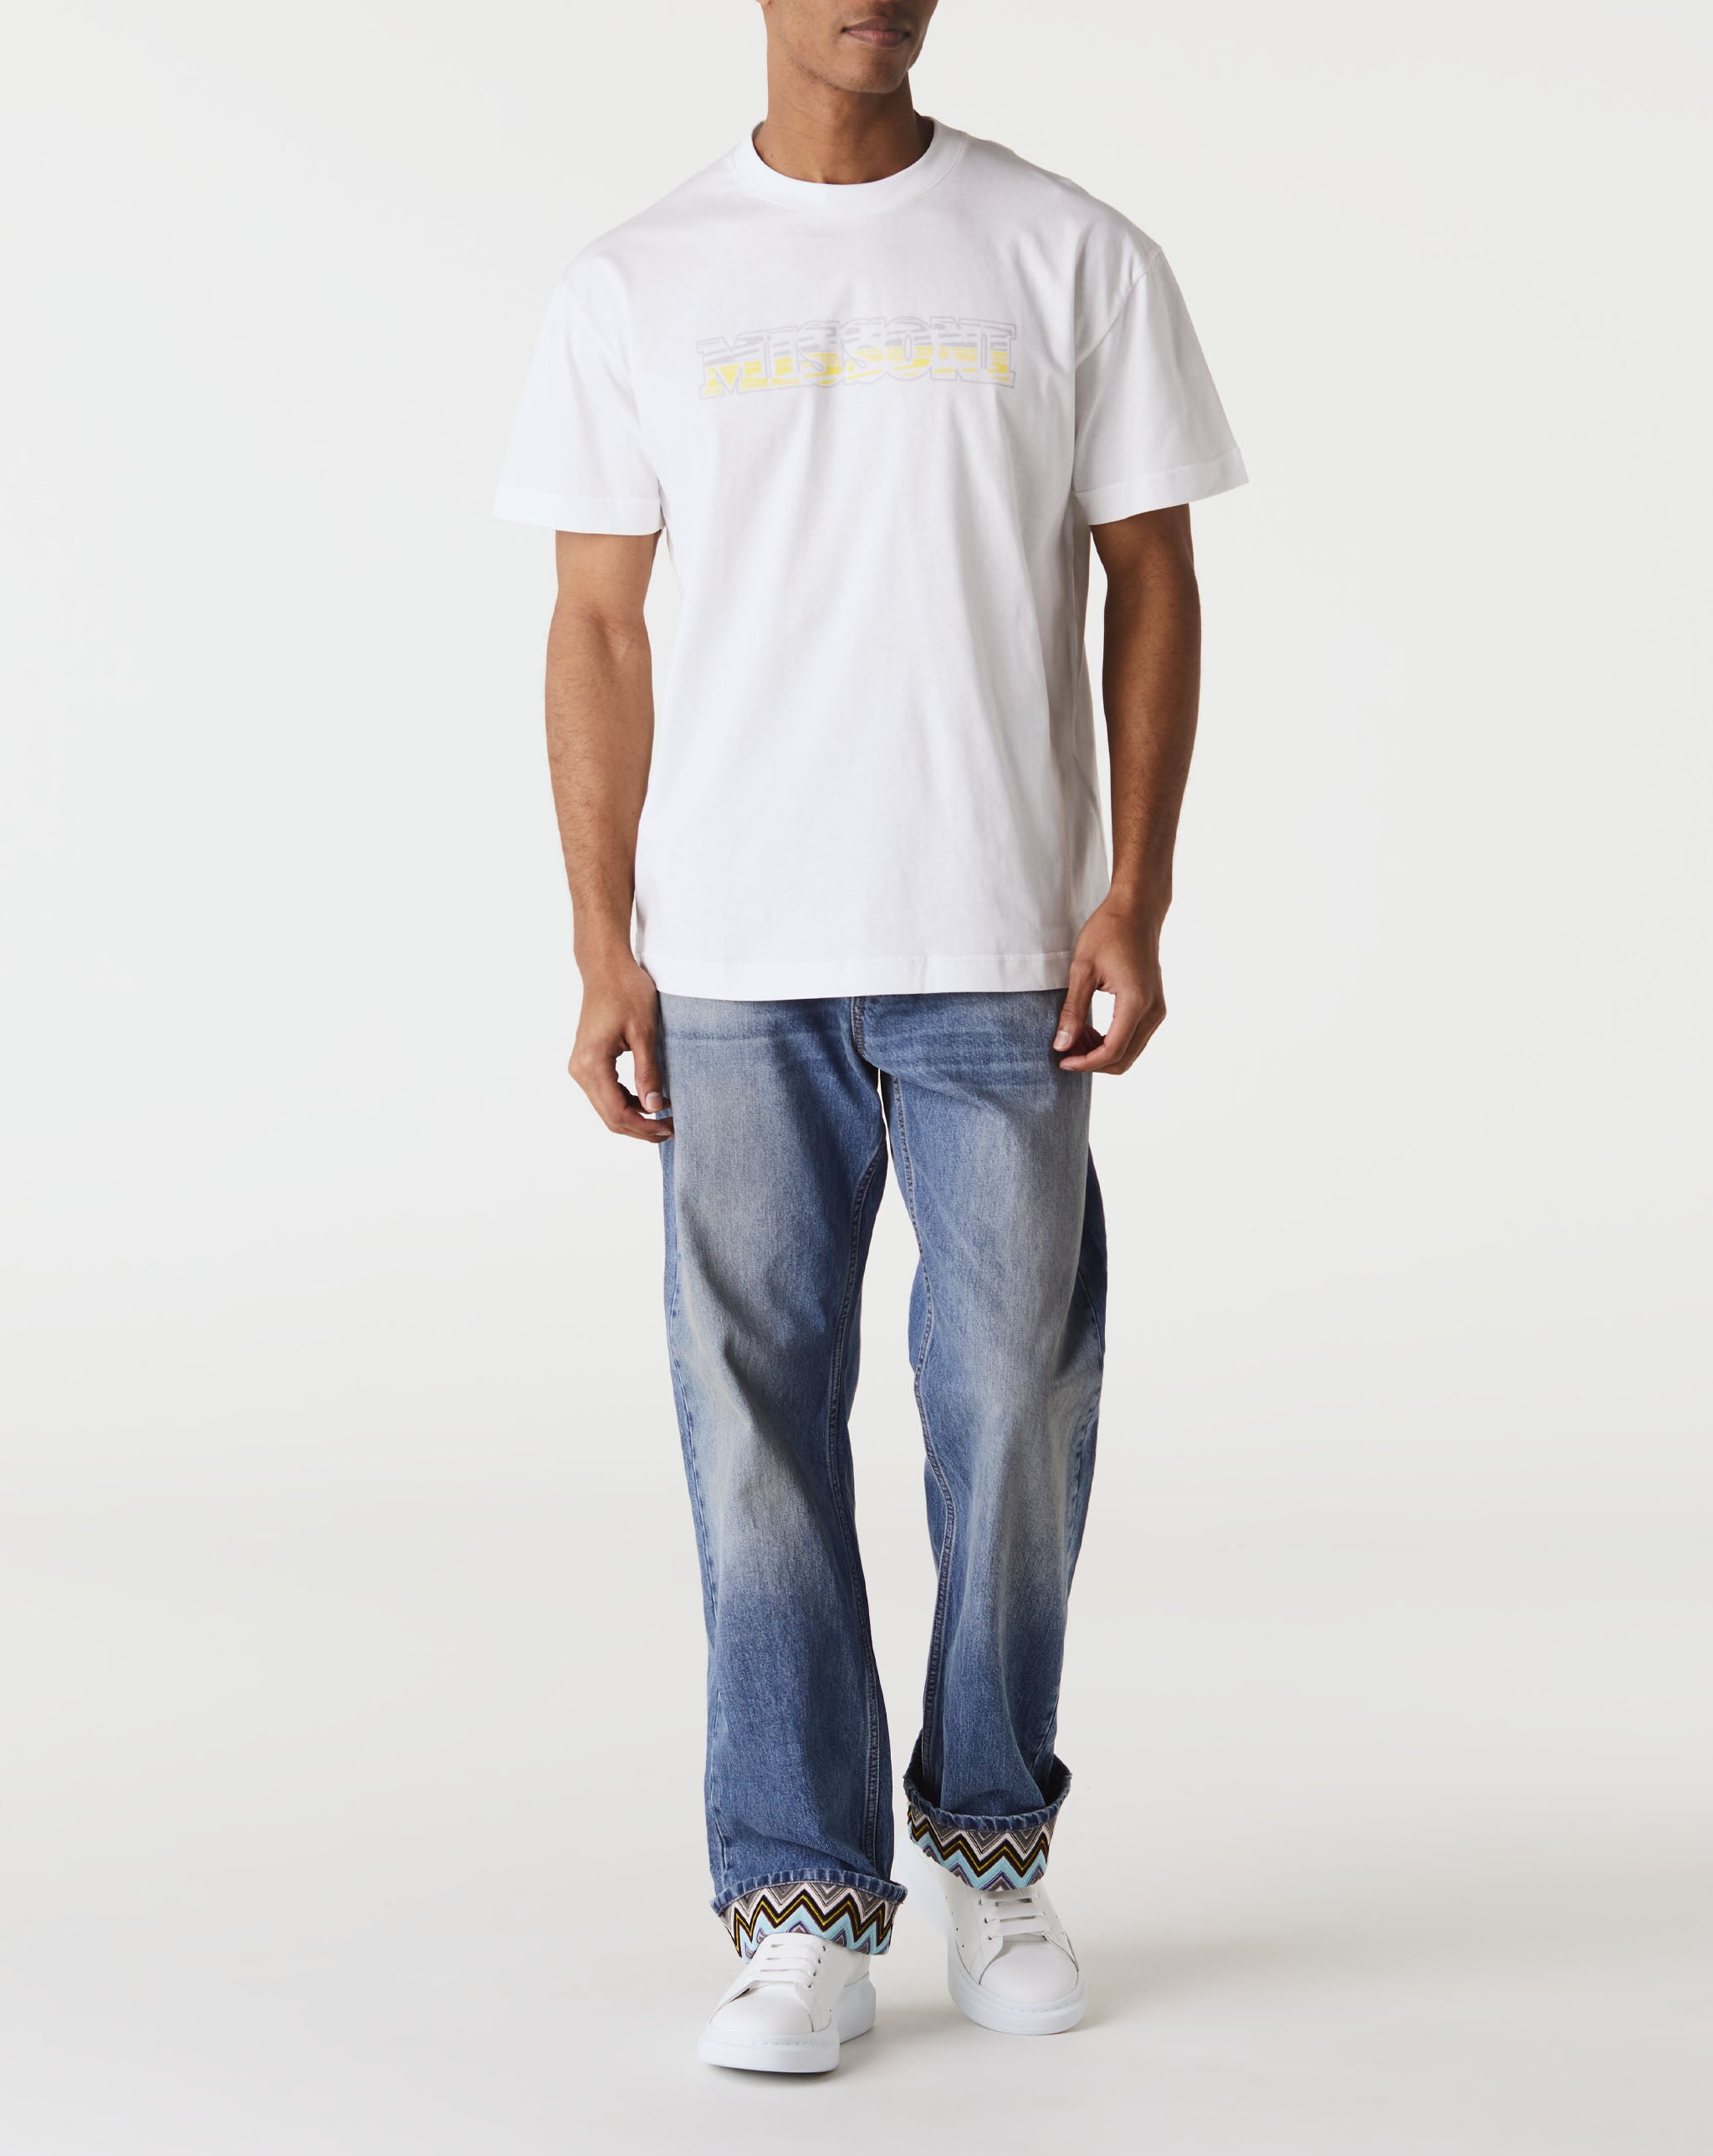 Missoni Short Sleeve T-Shirt  - XHIBITION